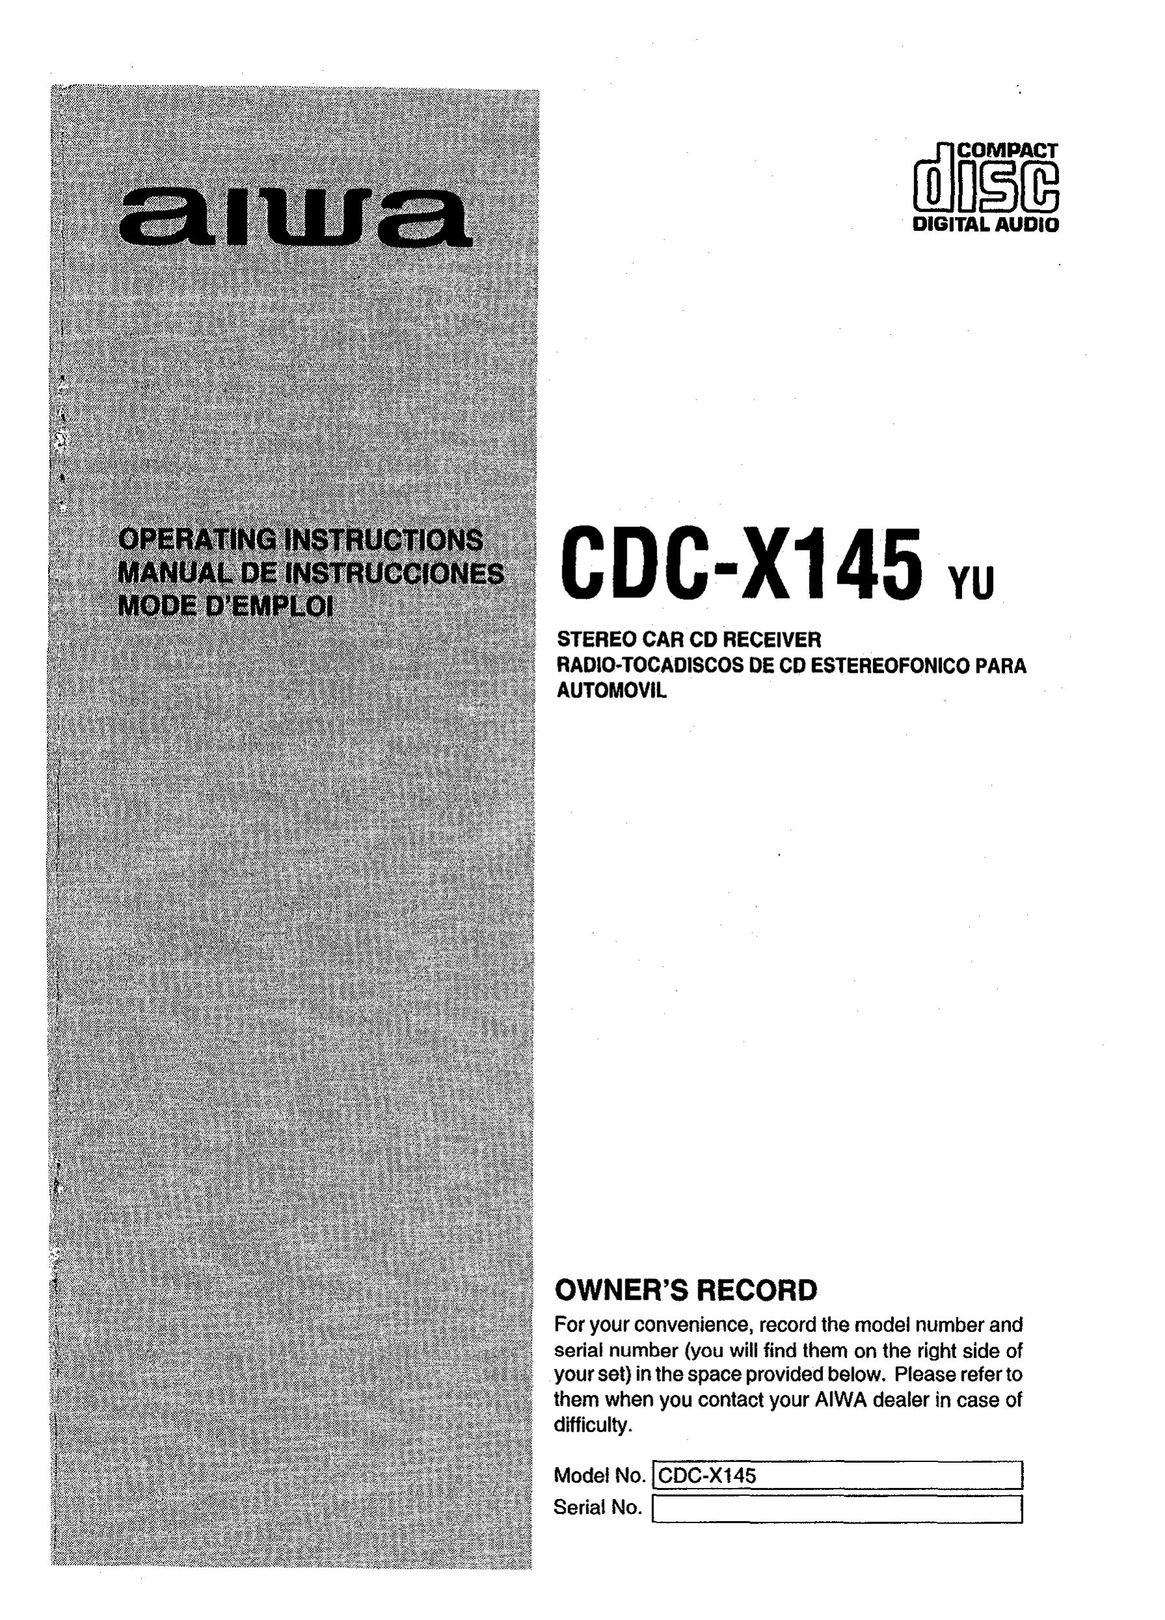 Aiwa CDC-X145 Car Stereo System User Manual